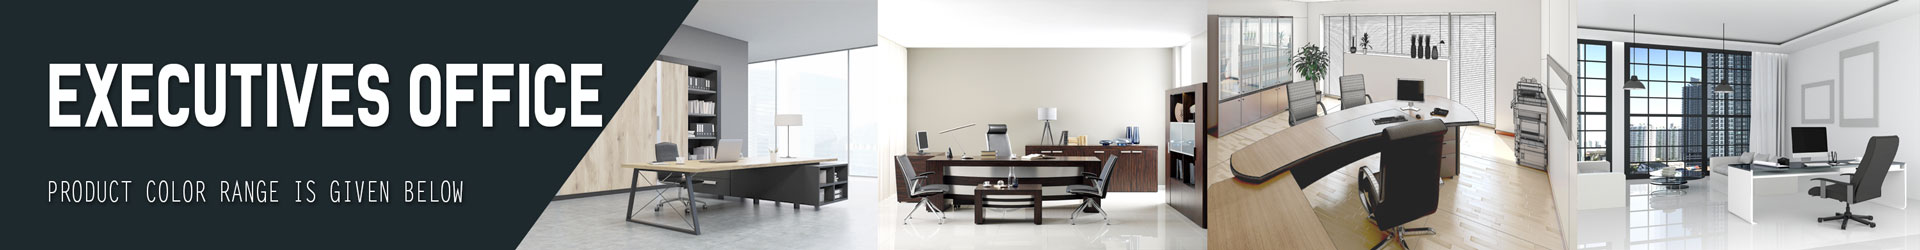 Executives-Office